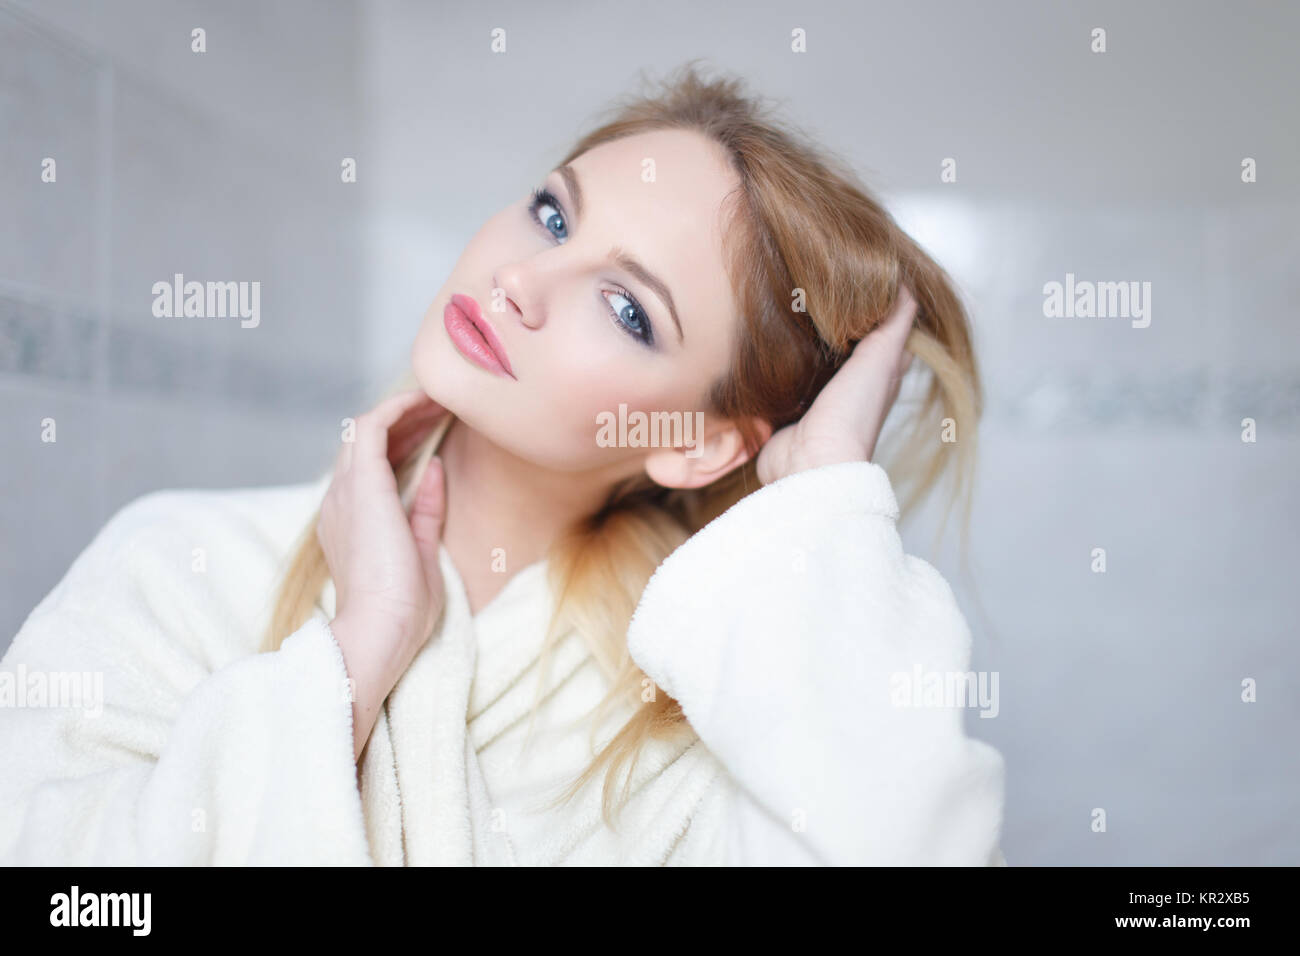 Young blonde woman in bathrobe portrait, posing in bathroom Stock Photo